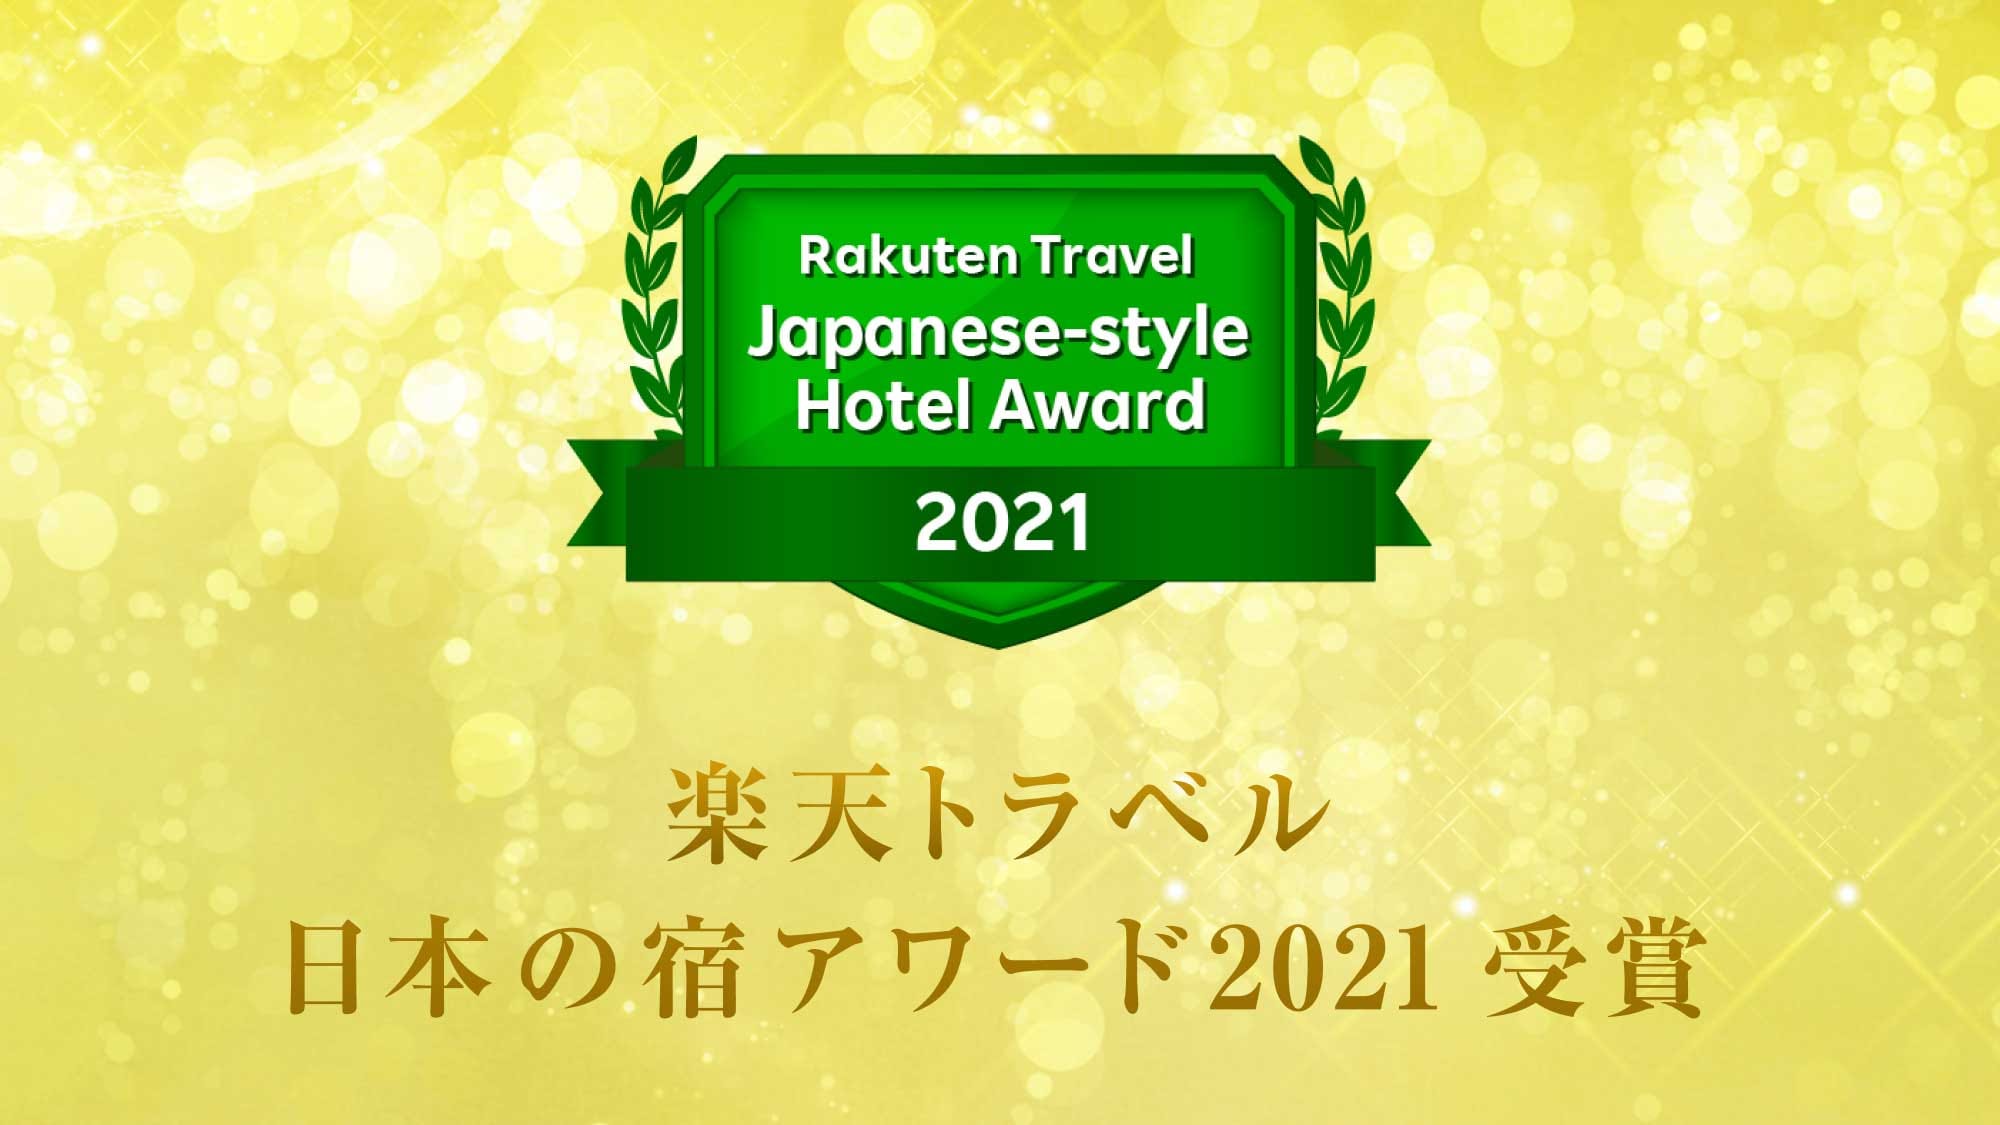 Thanks to everyone, we received the "Rakuten Travel Japanese Inn Award 2021".